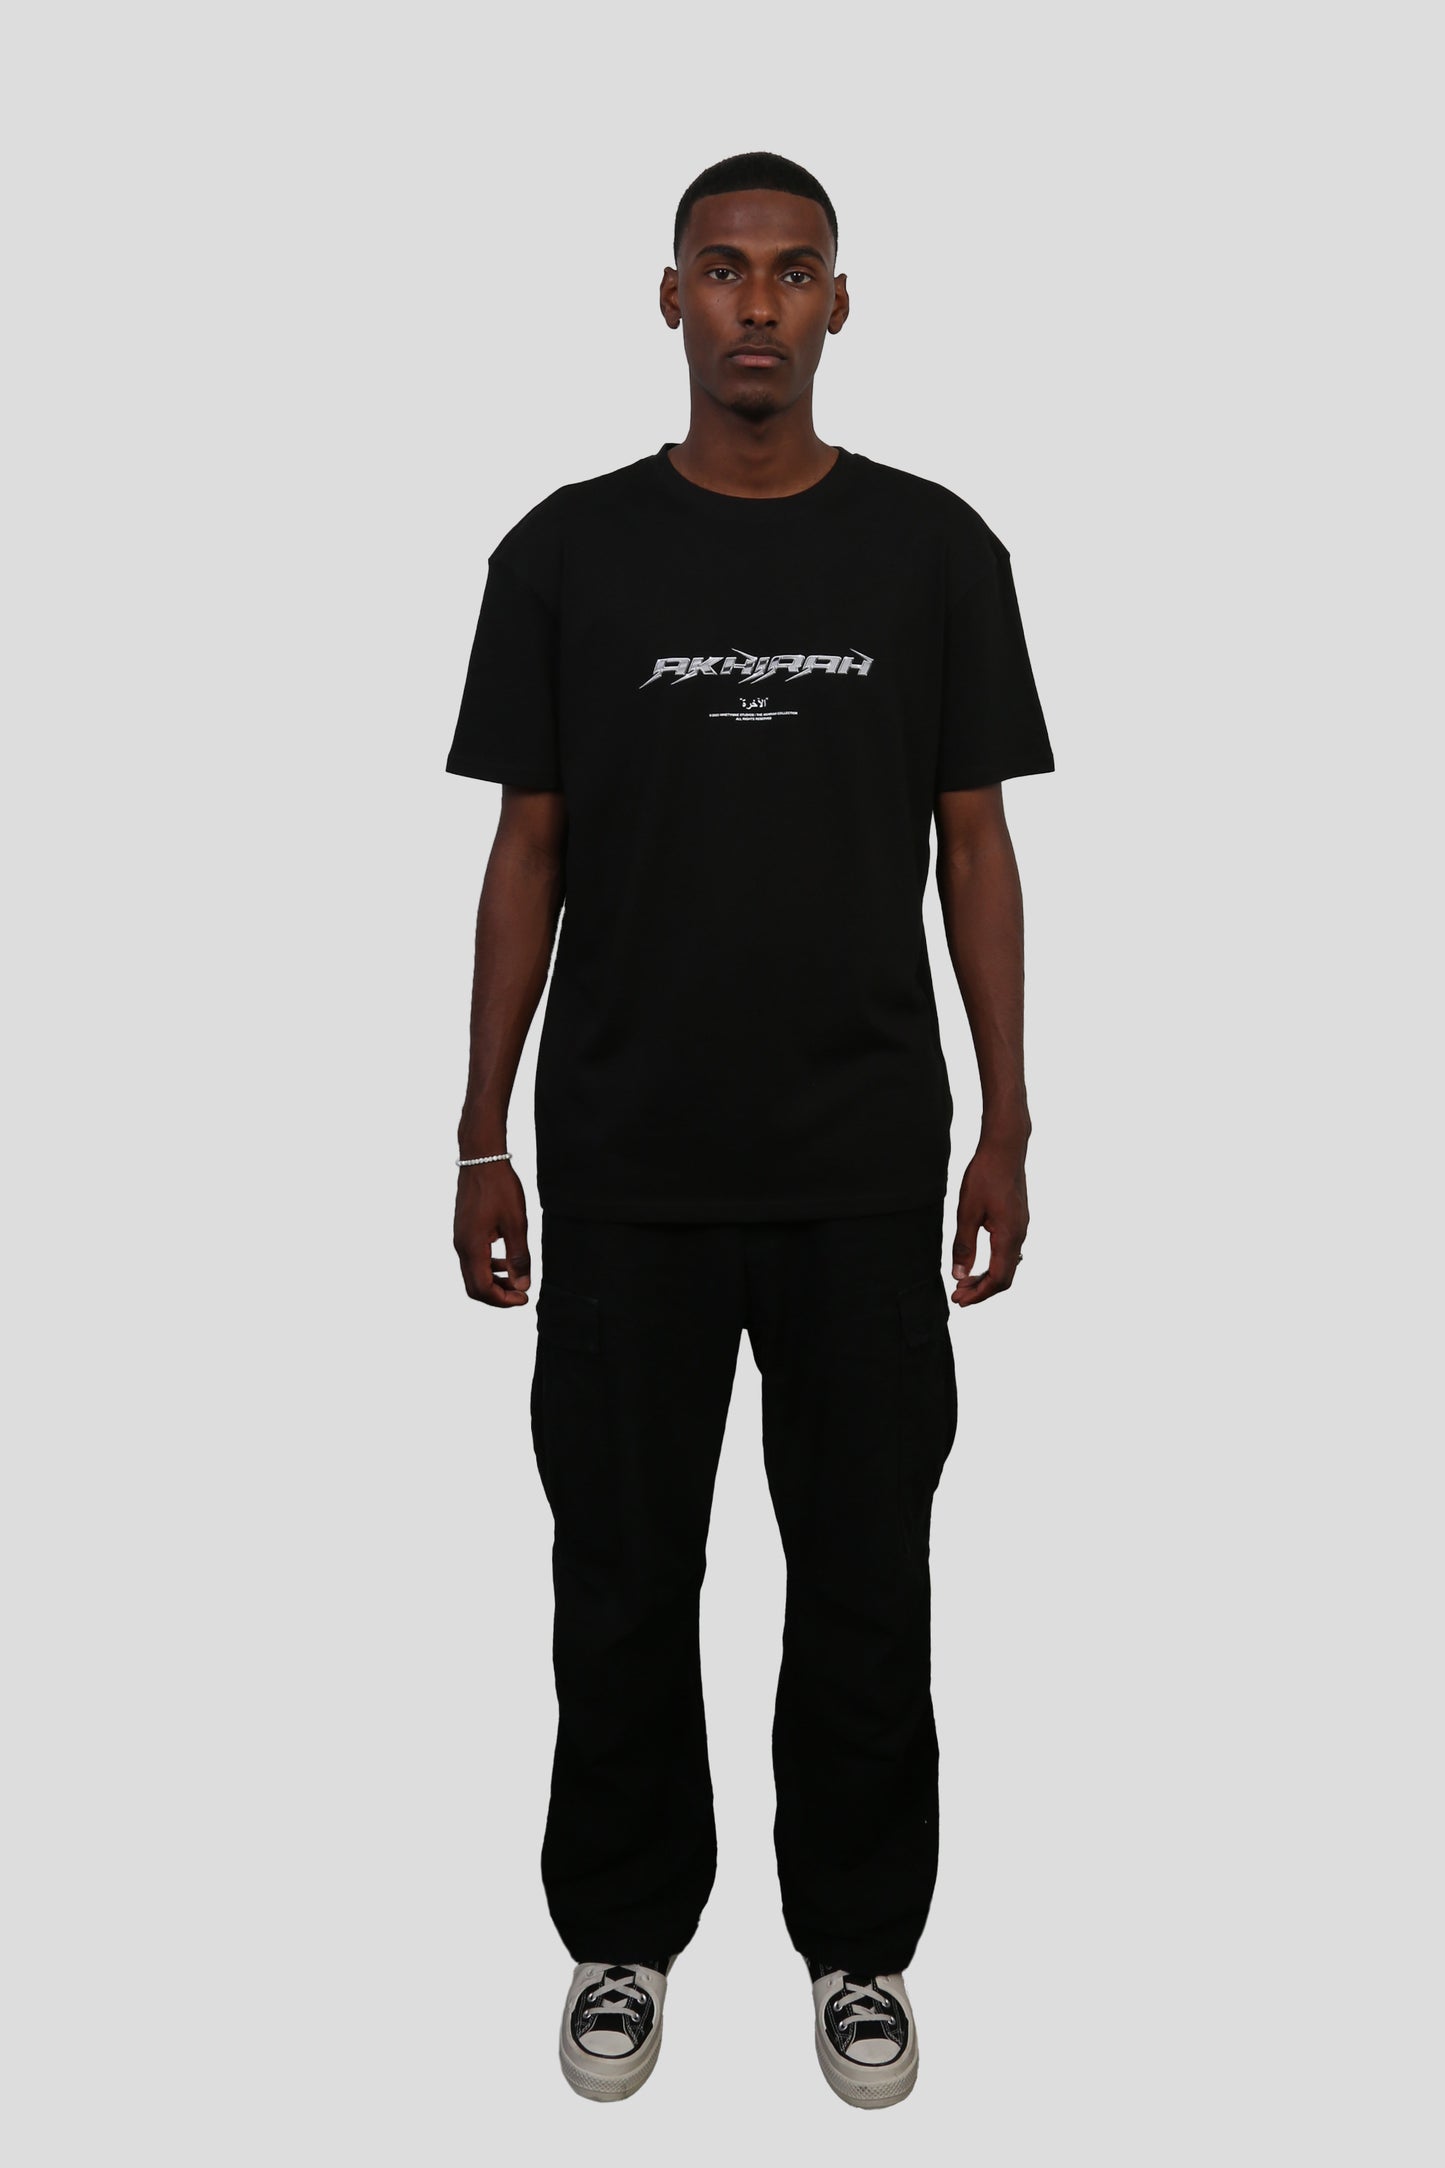 www.ninetyninestudios.de| AKHIRAH CHROME T-SHIRT BLACK| T-Shirt | €34.99 | Revolutionary Islamic Streetwear | 99Studios